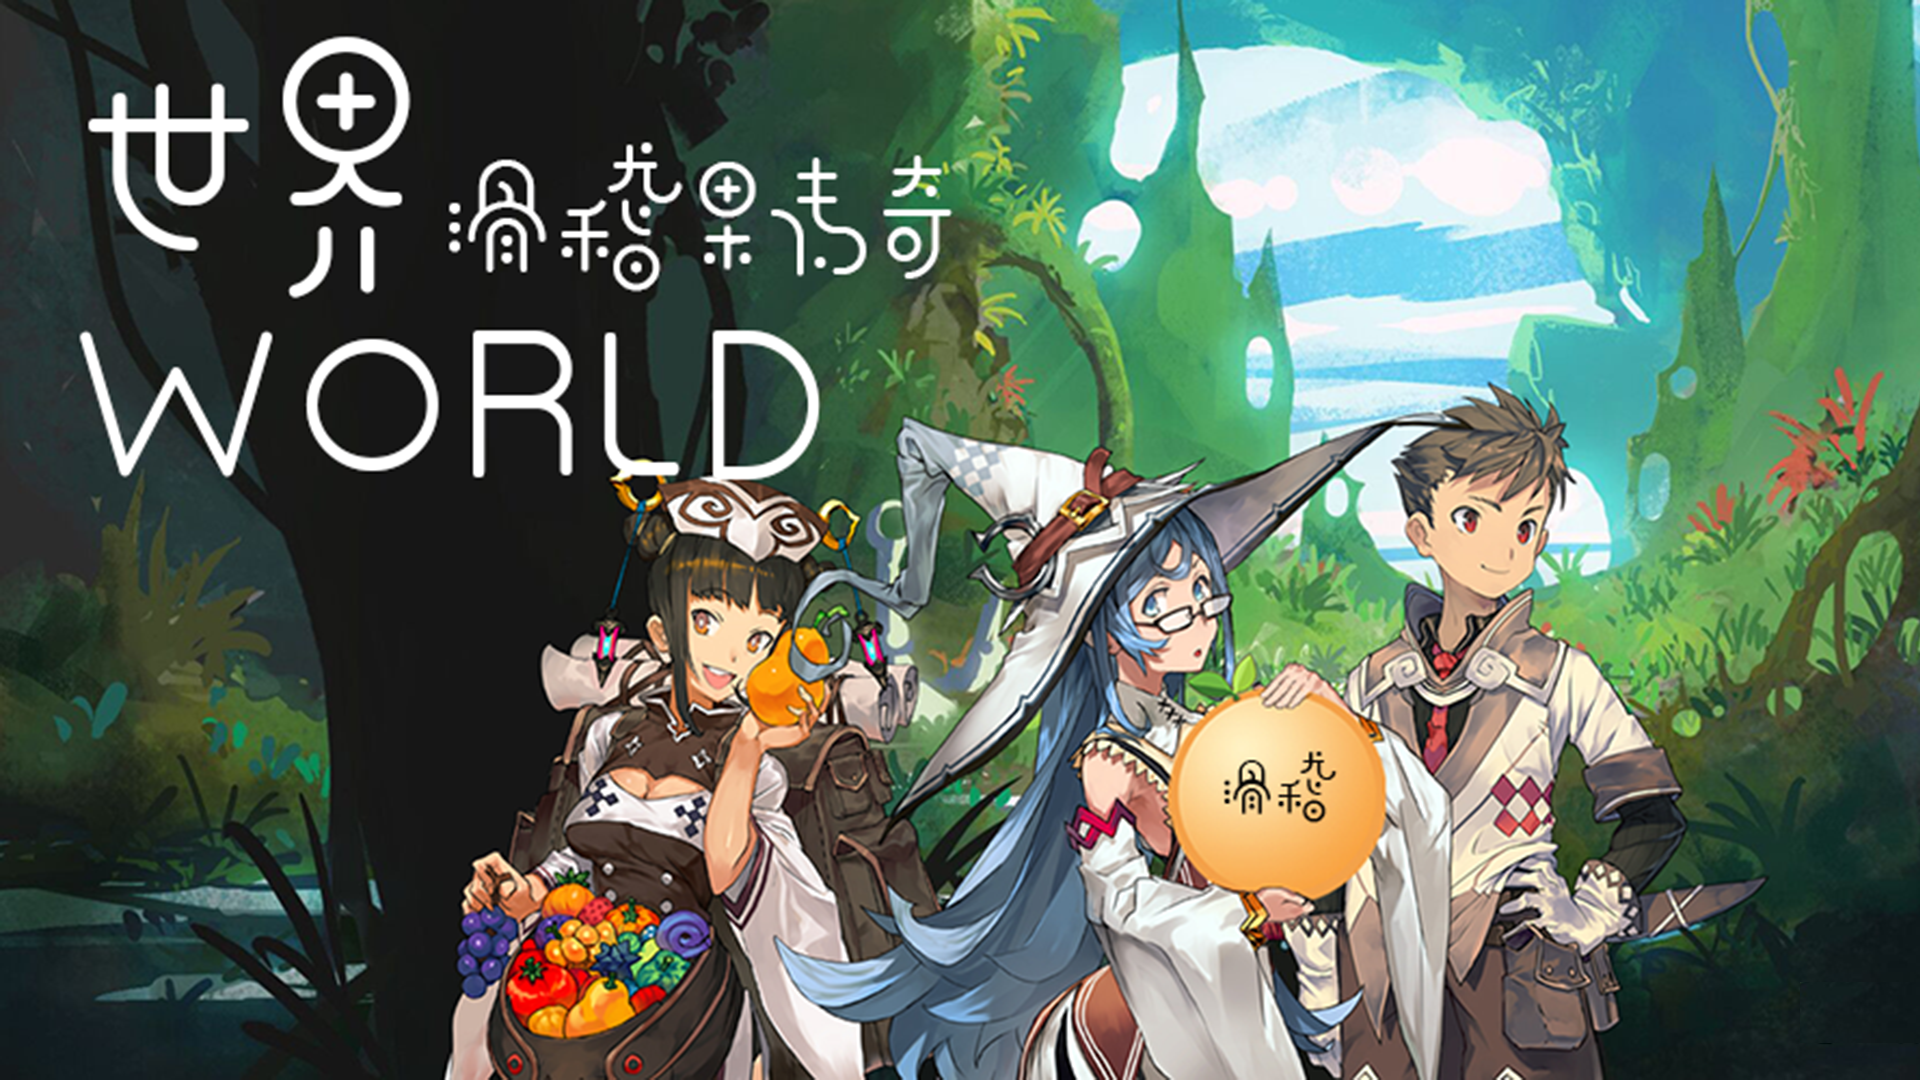 Banner of Legenda Buah Lucu Dunia Dunia4 2.0.0